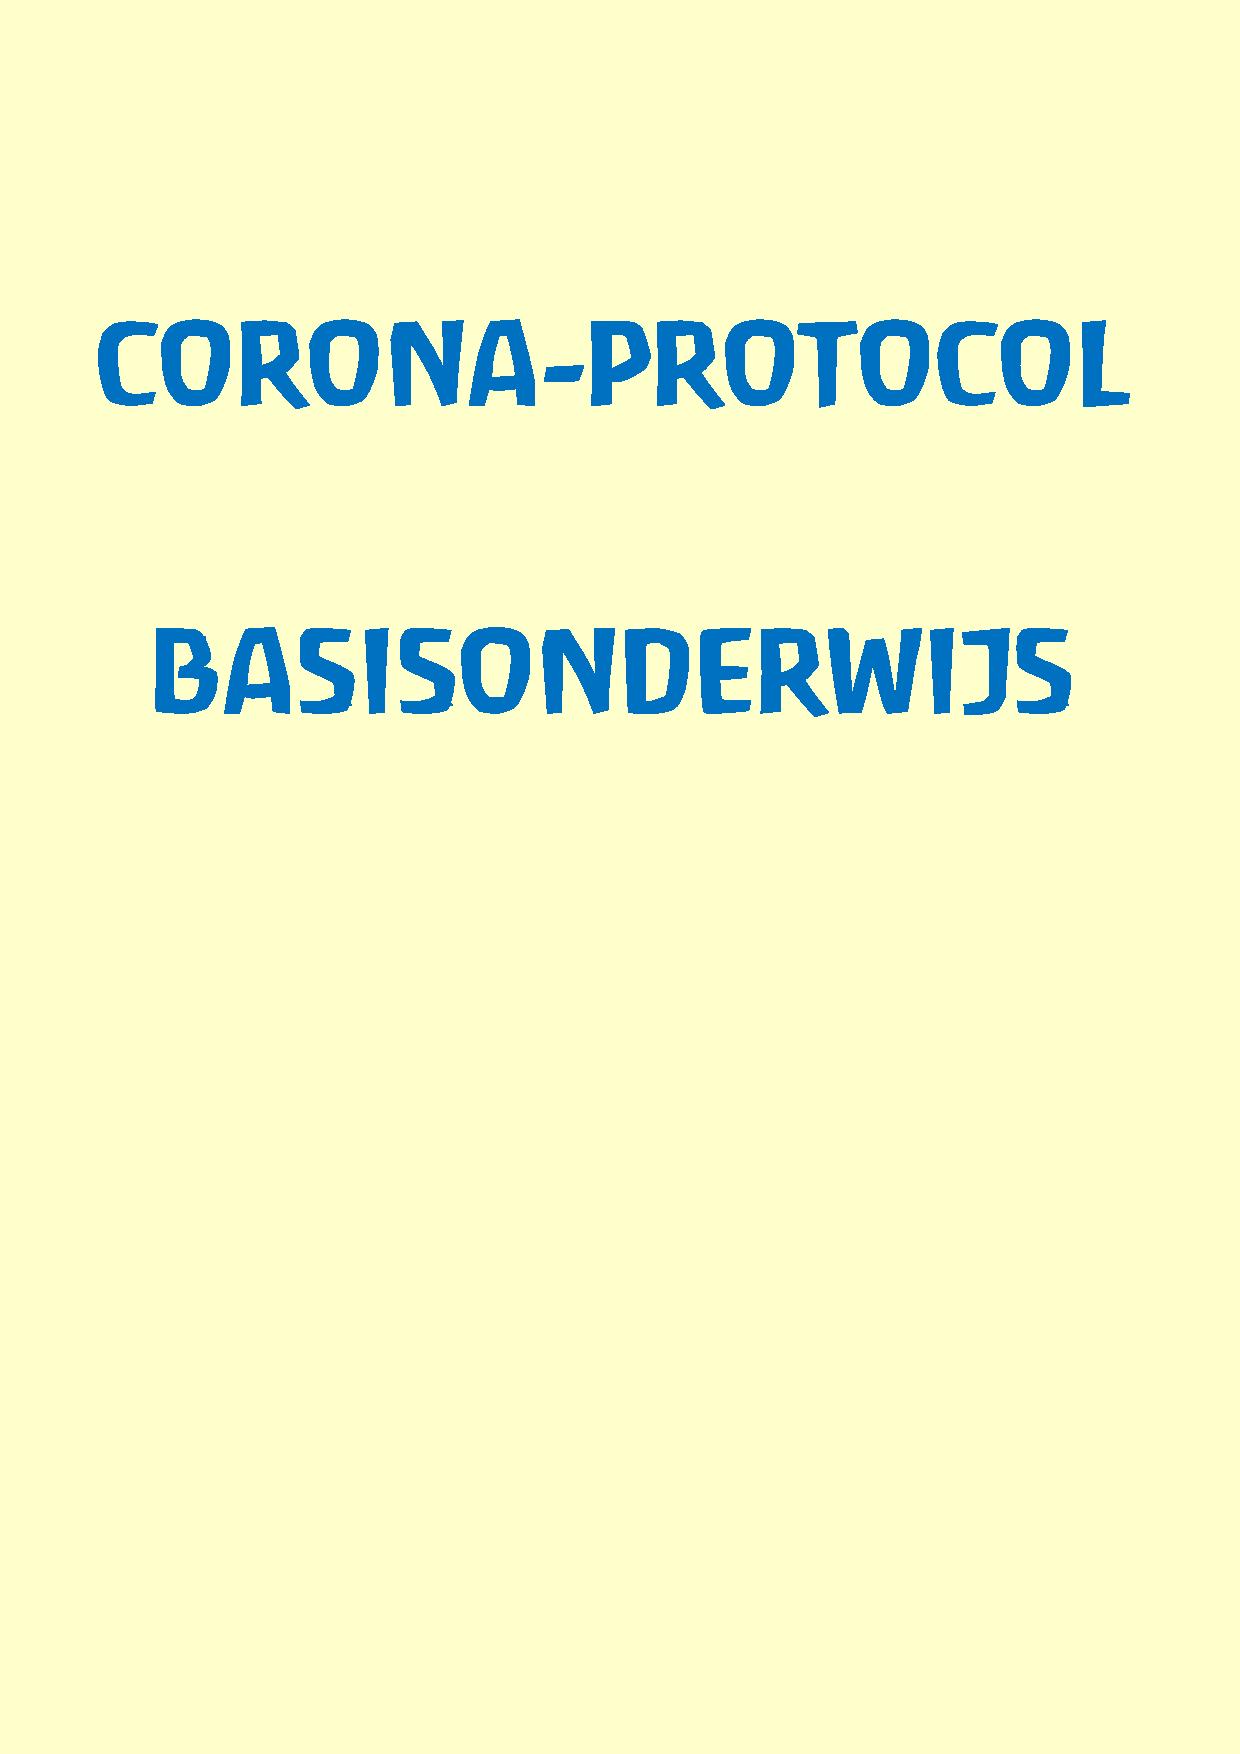 Corona-protocol basisonderwijs versie 10-01-2022